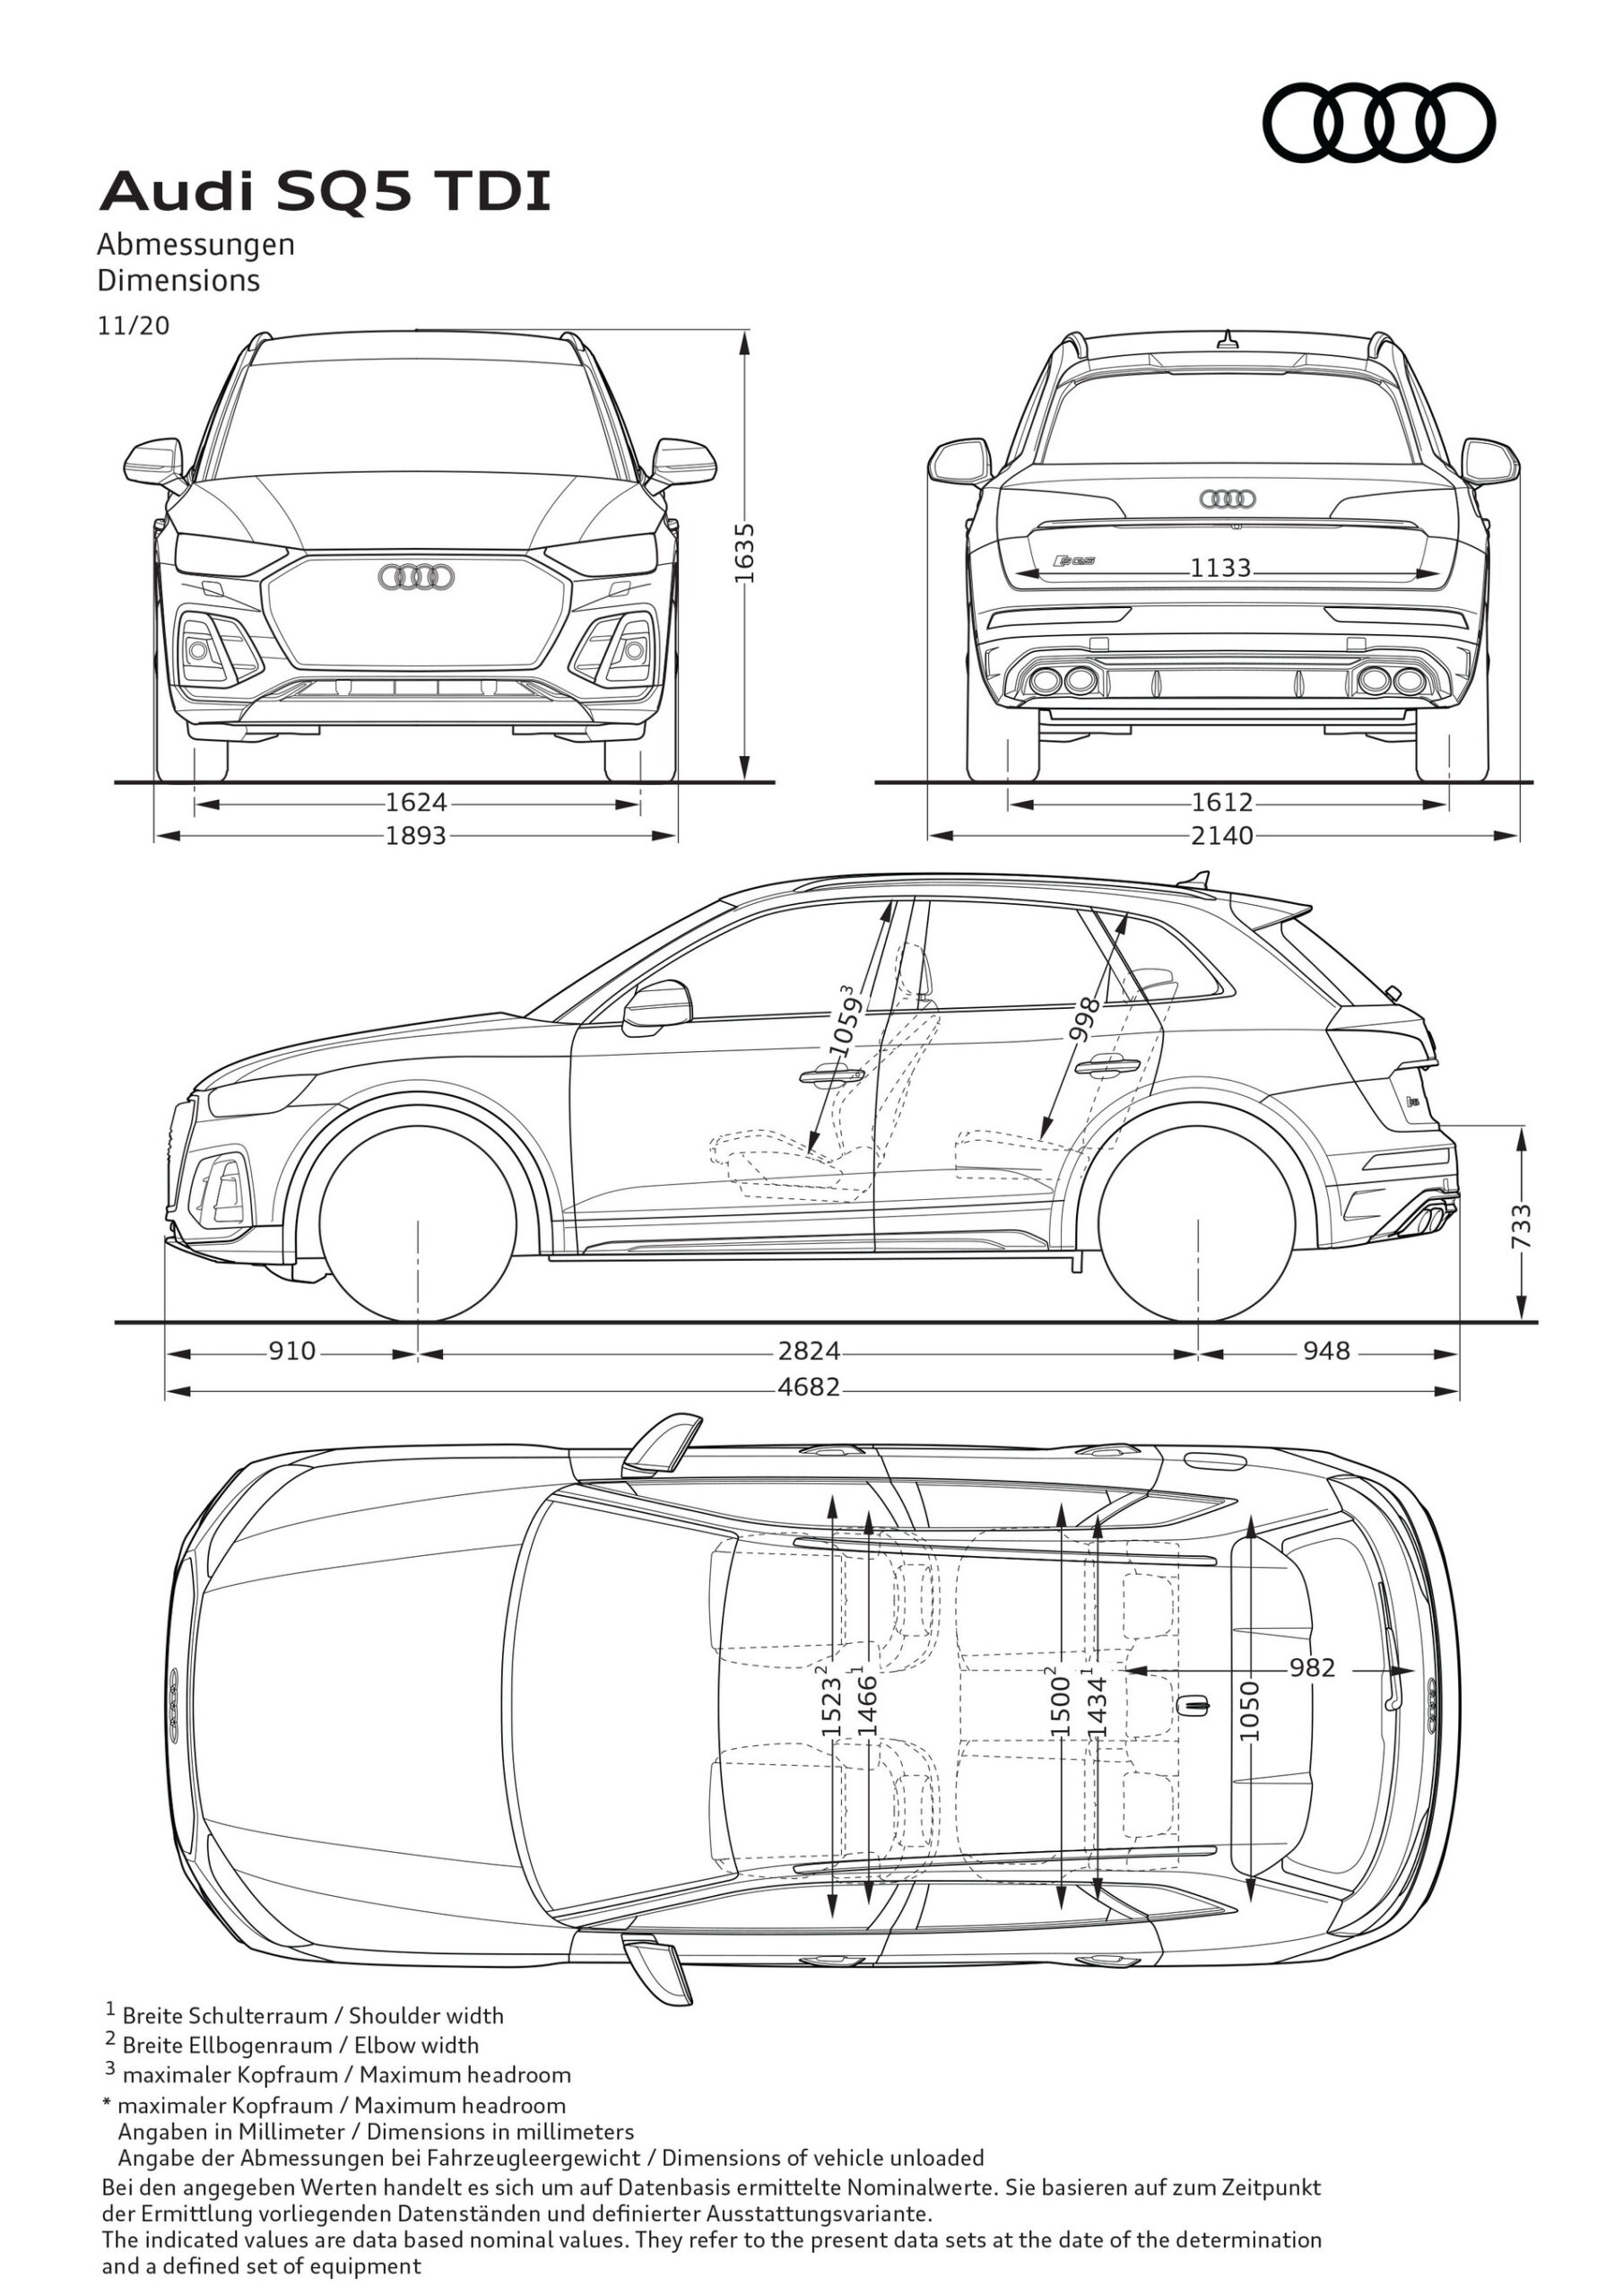 Dimensioni nuova Audi SQ5 2021 restyling